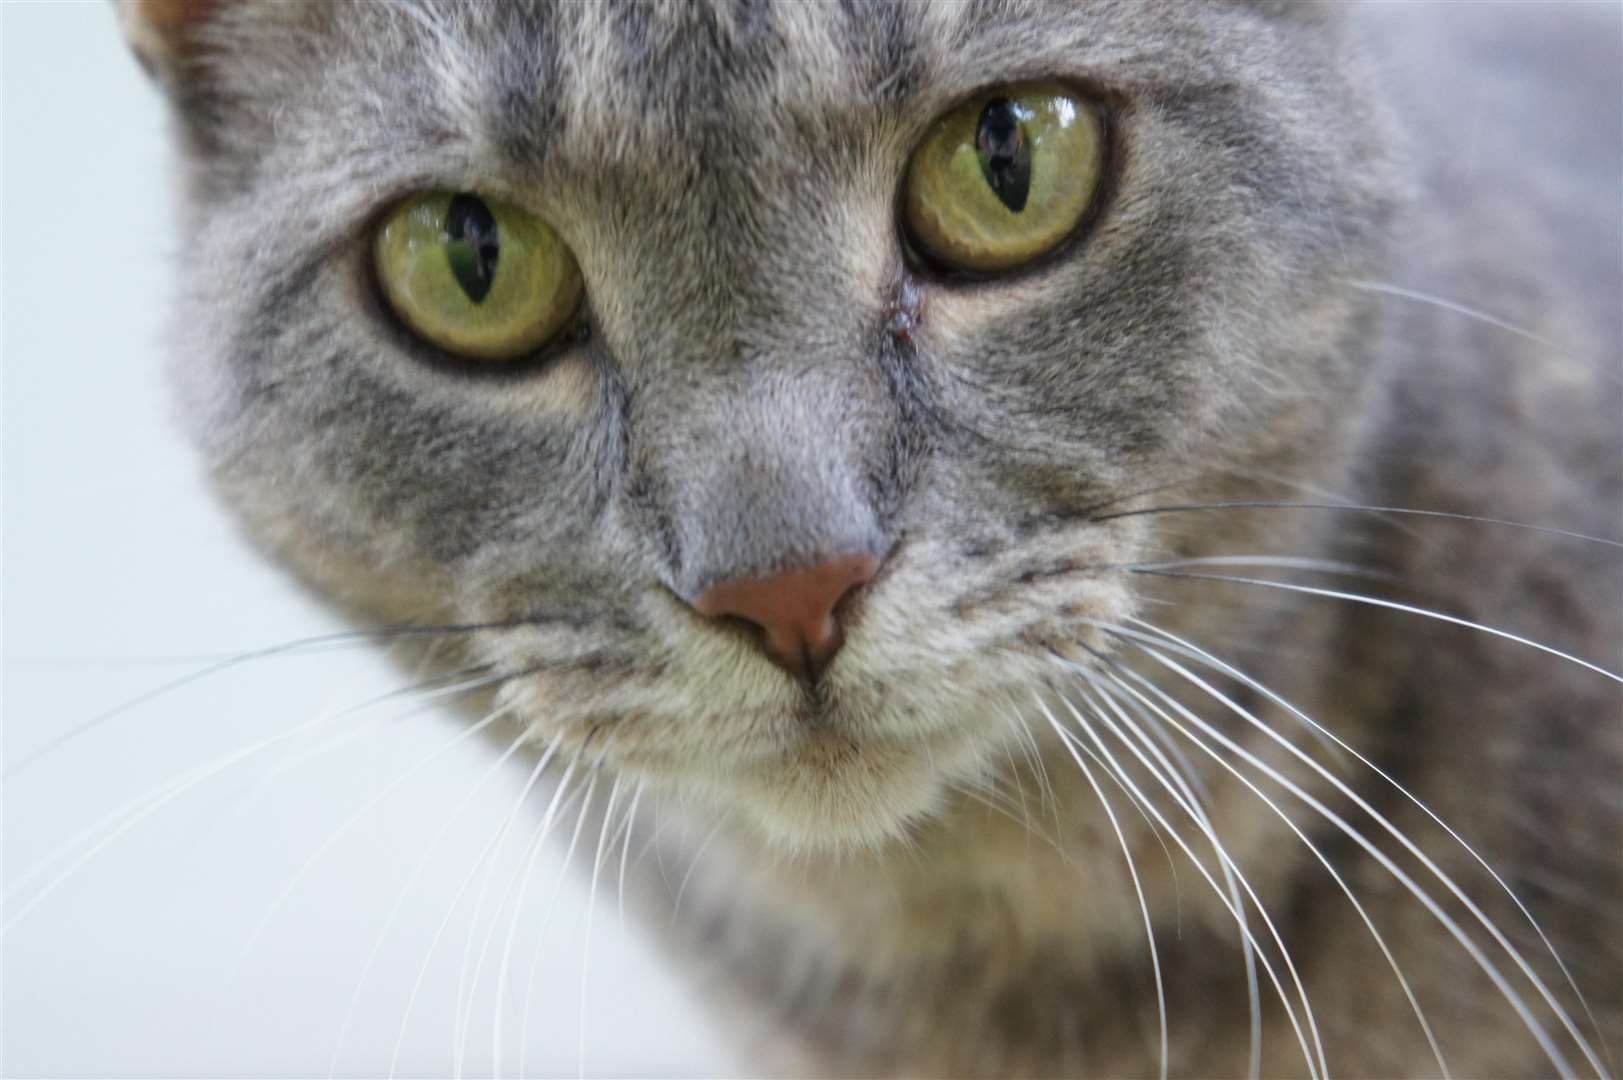 Stock image of grey tabby cat. Credit: Wikimedia SportsandHistoryReader521 (4293560)